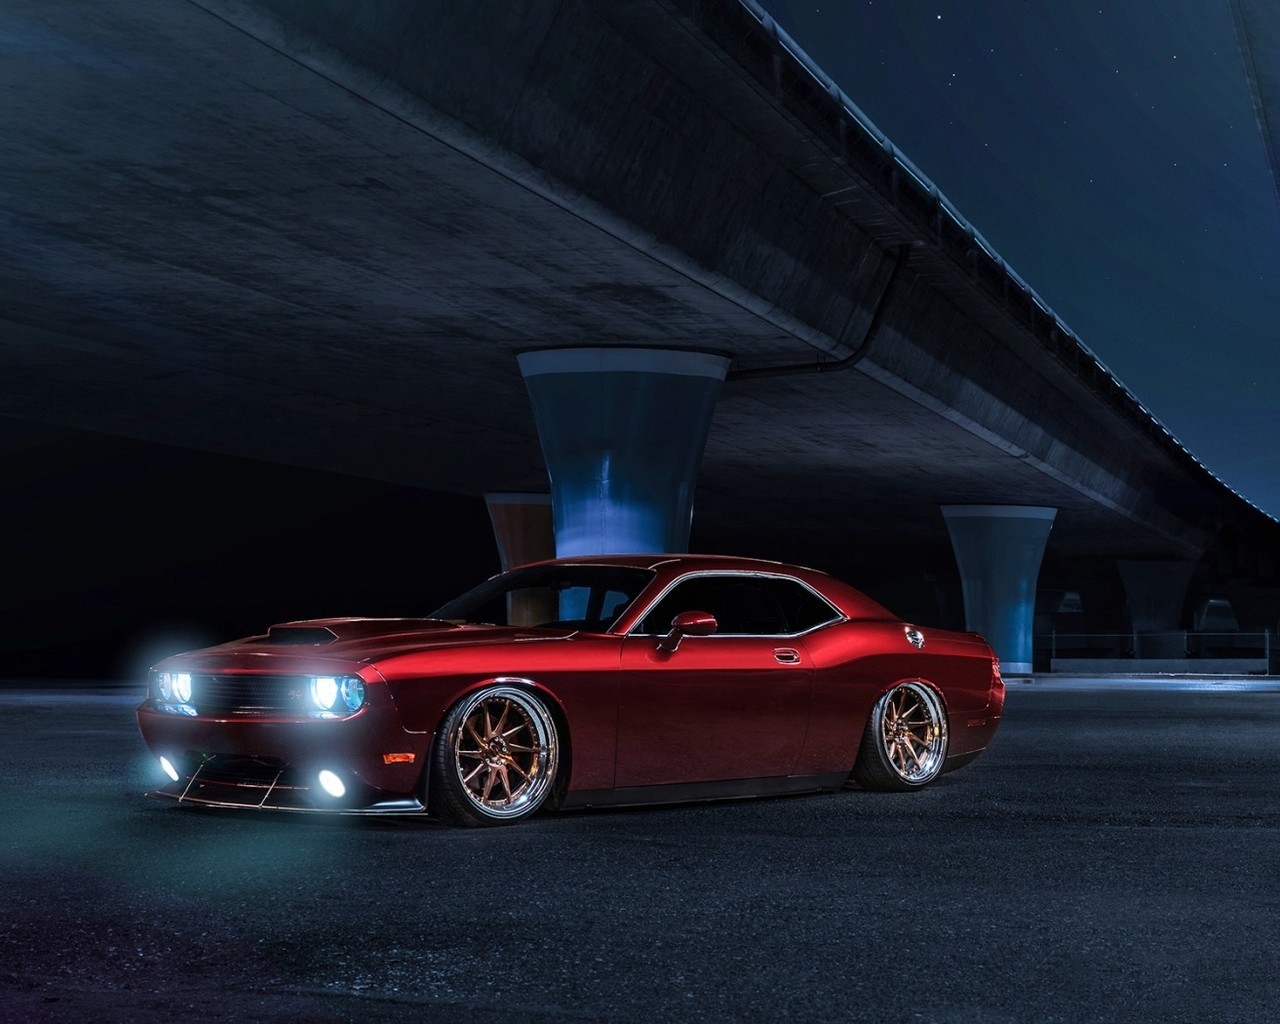 Red Dodge Challenger Avant Garde for 1280 x 1024 resolution